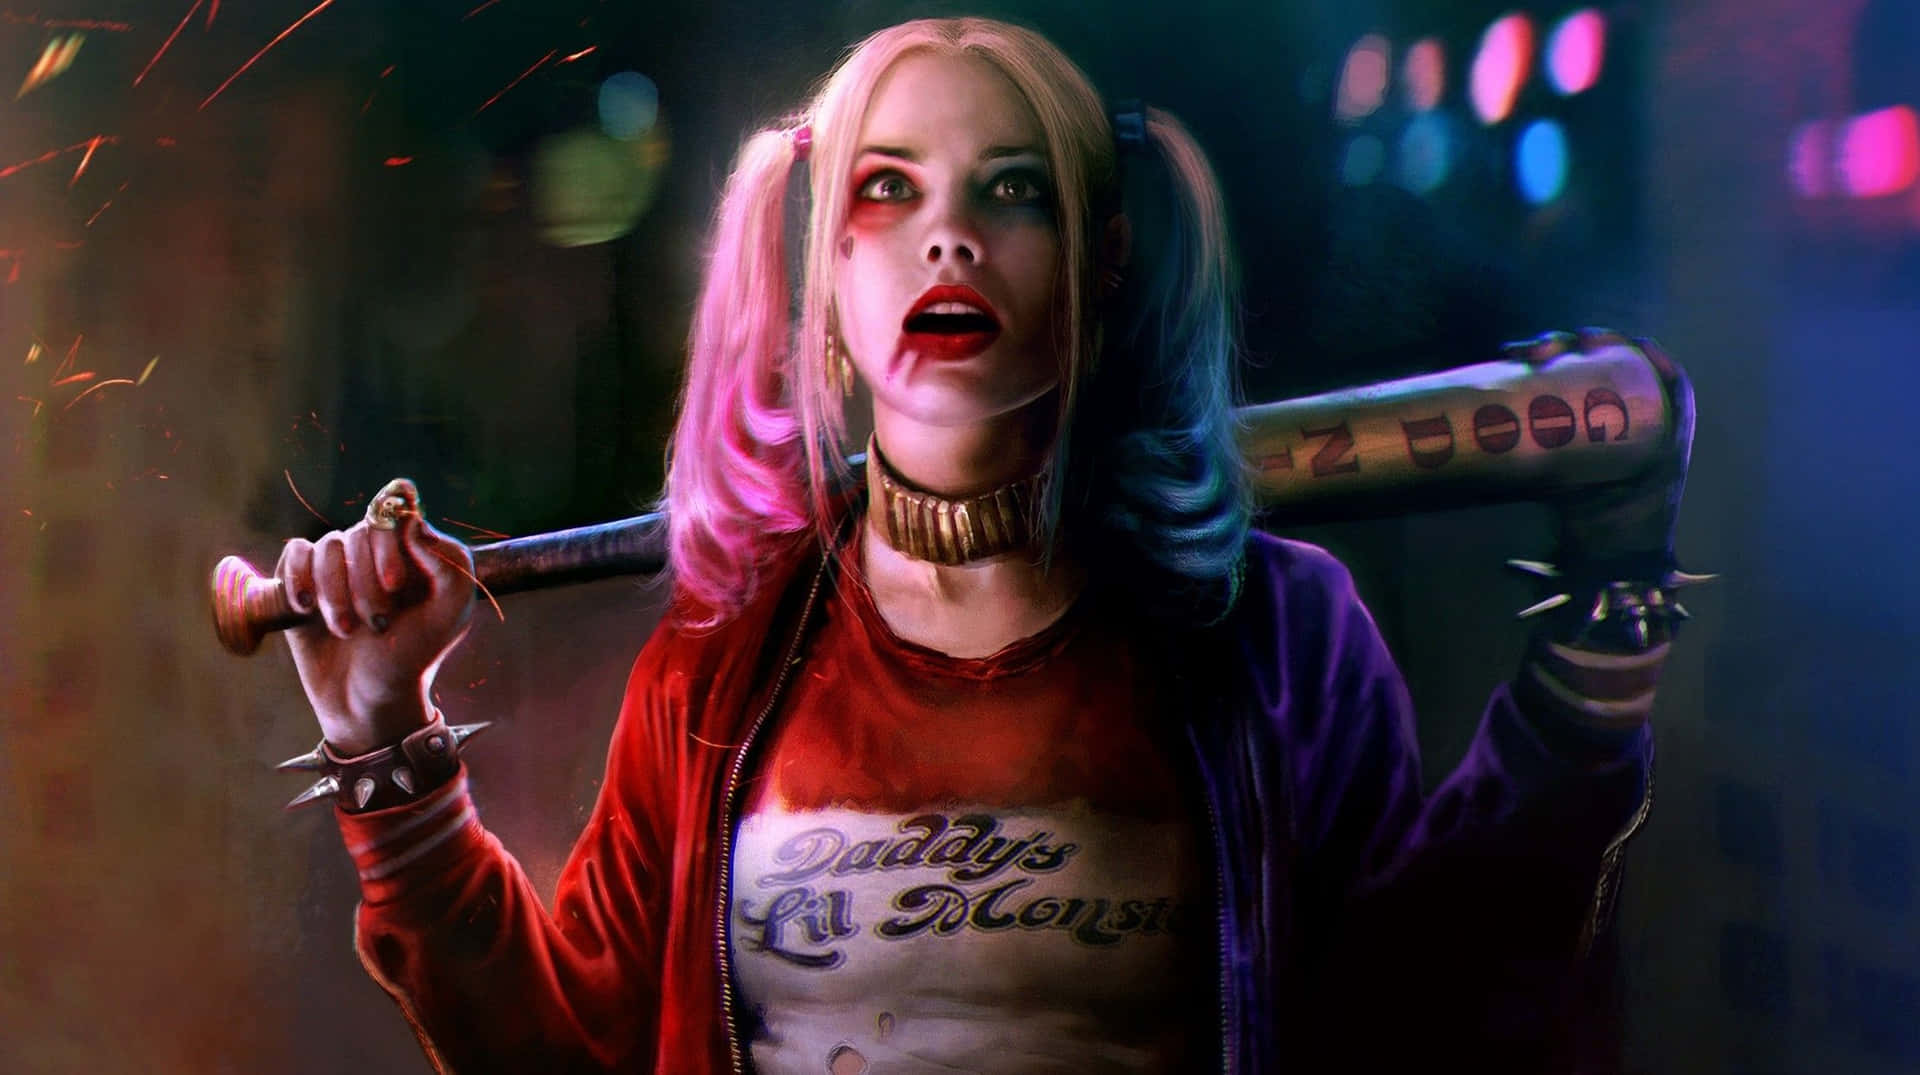 Margotrobbie Som Harley Quinn I Suicide Squad. Wallpaper